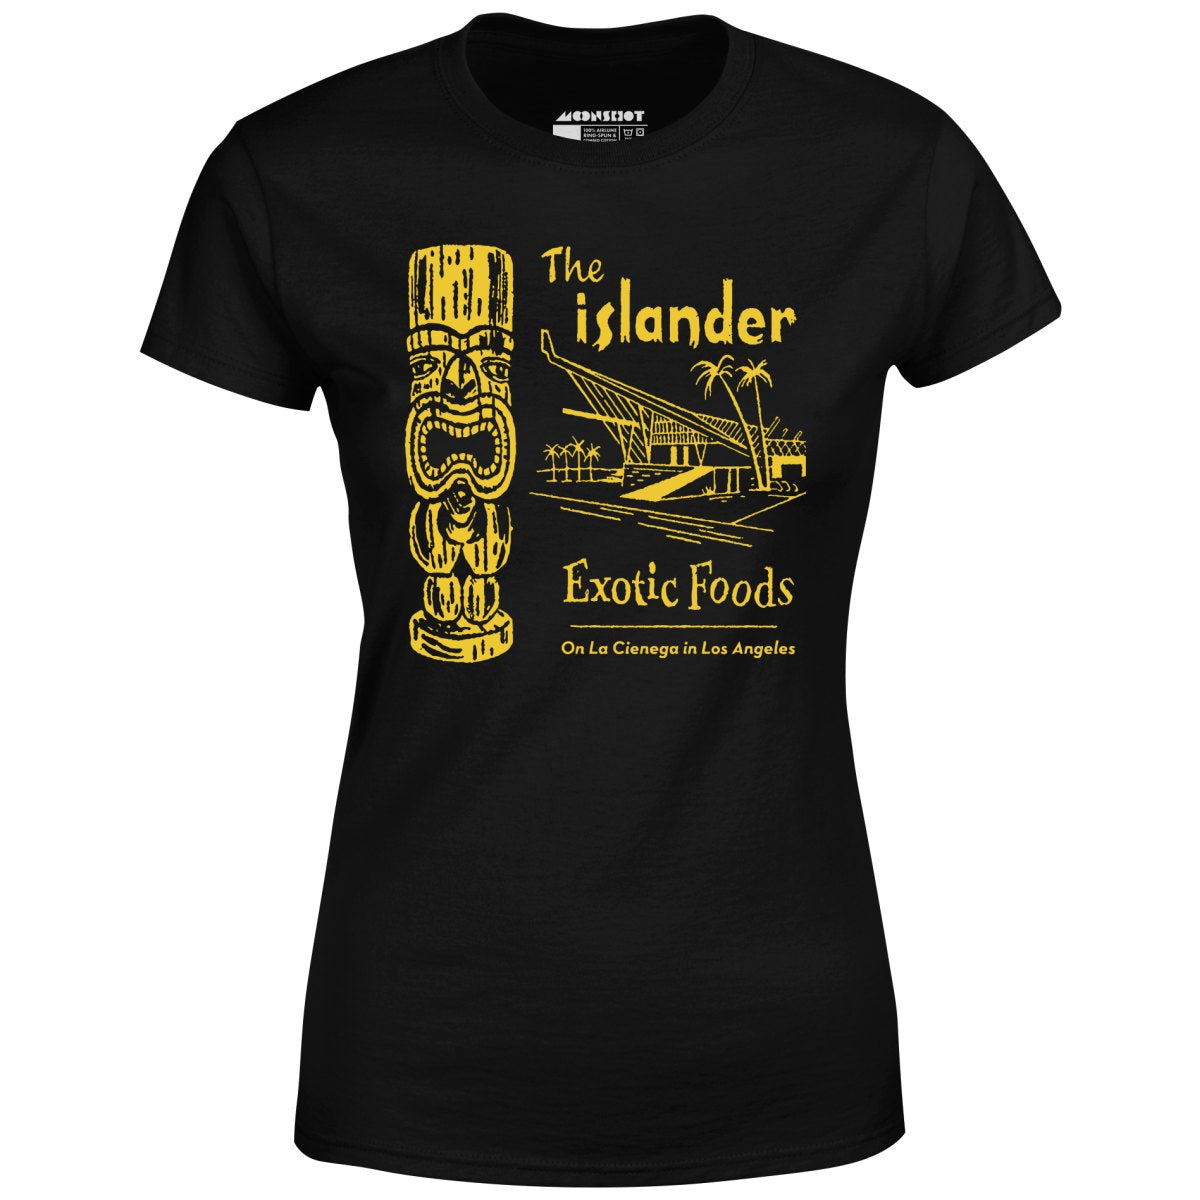 The Islander - Los Angeles, CA - Vintage Tiki Bar - Women's T-Shirt